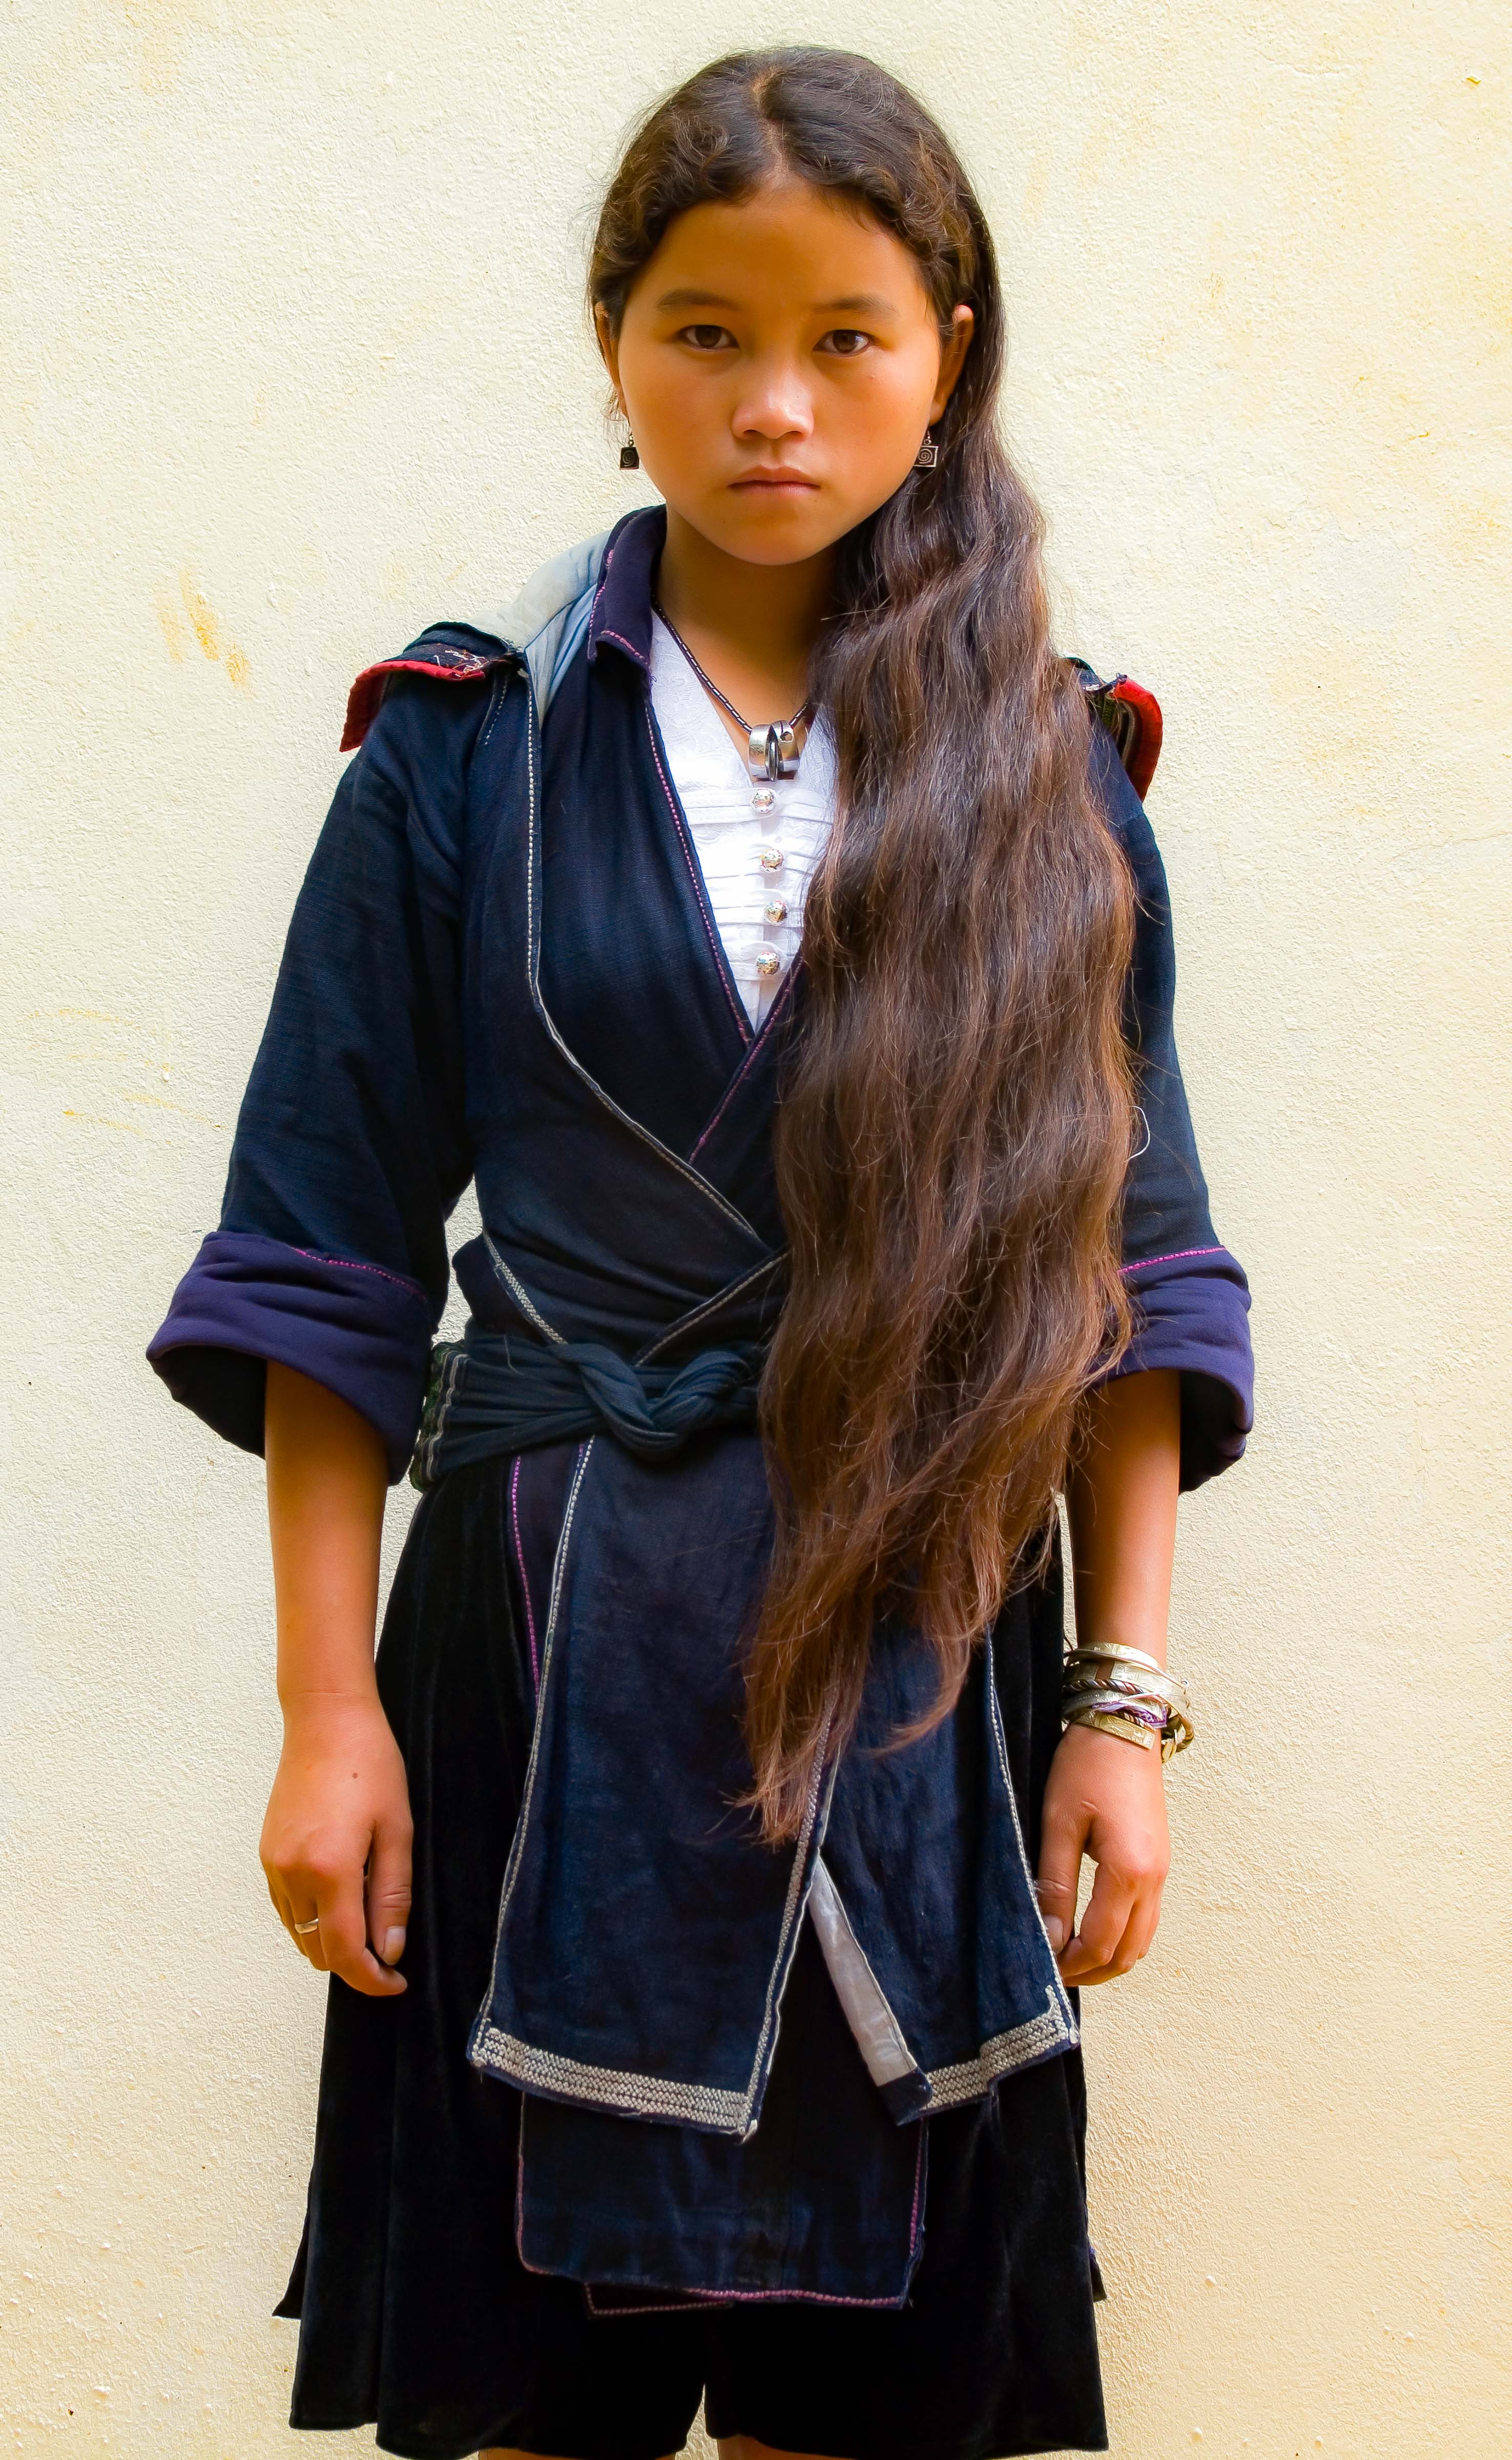 Vietnam, Lao Cai Prov, Sapa Girl, Cha, 2008, IMG_8488